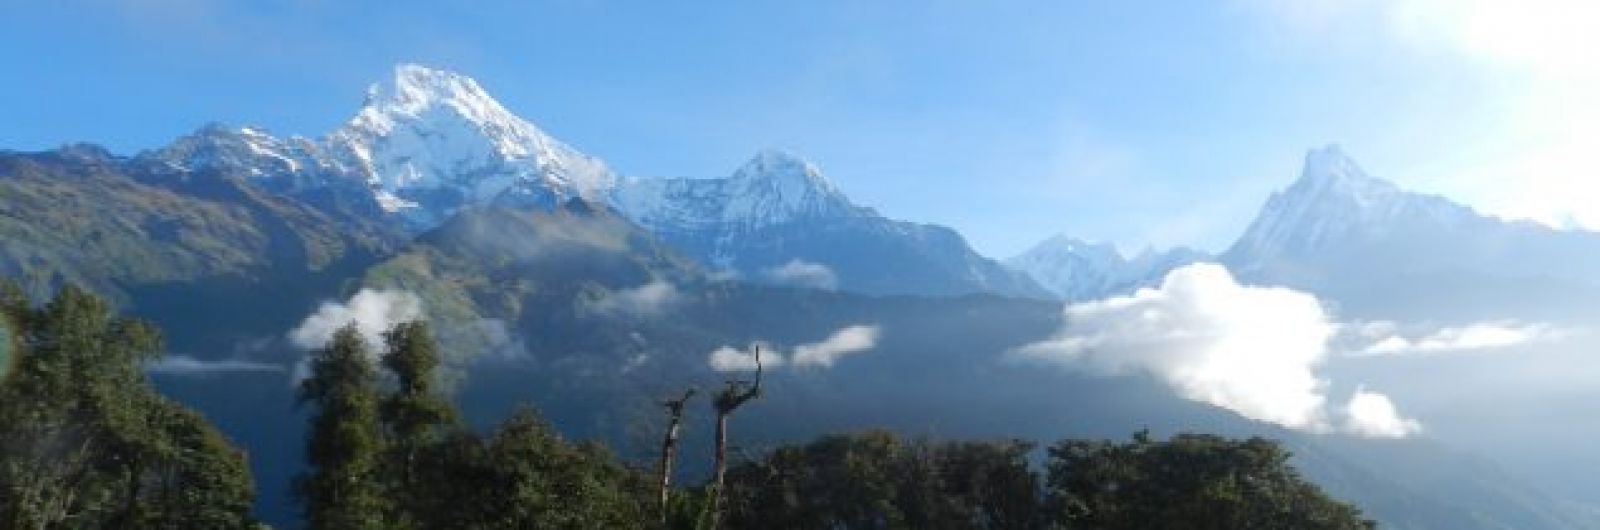 Trekking Annapurna con Lago Tilicho y Thorong Peak